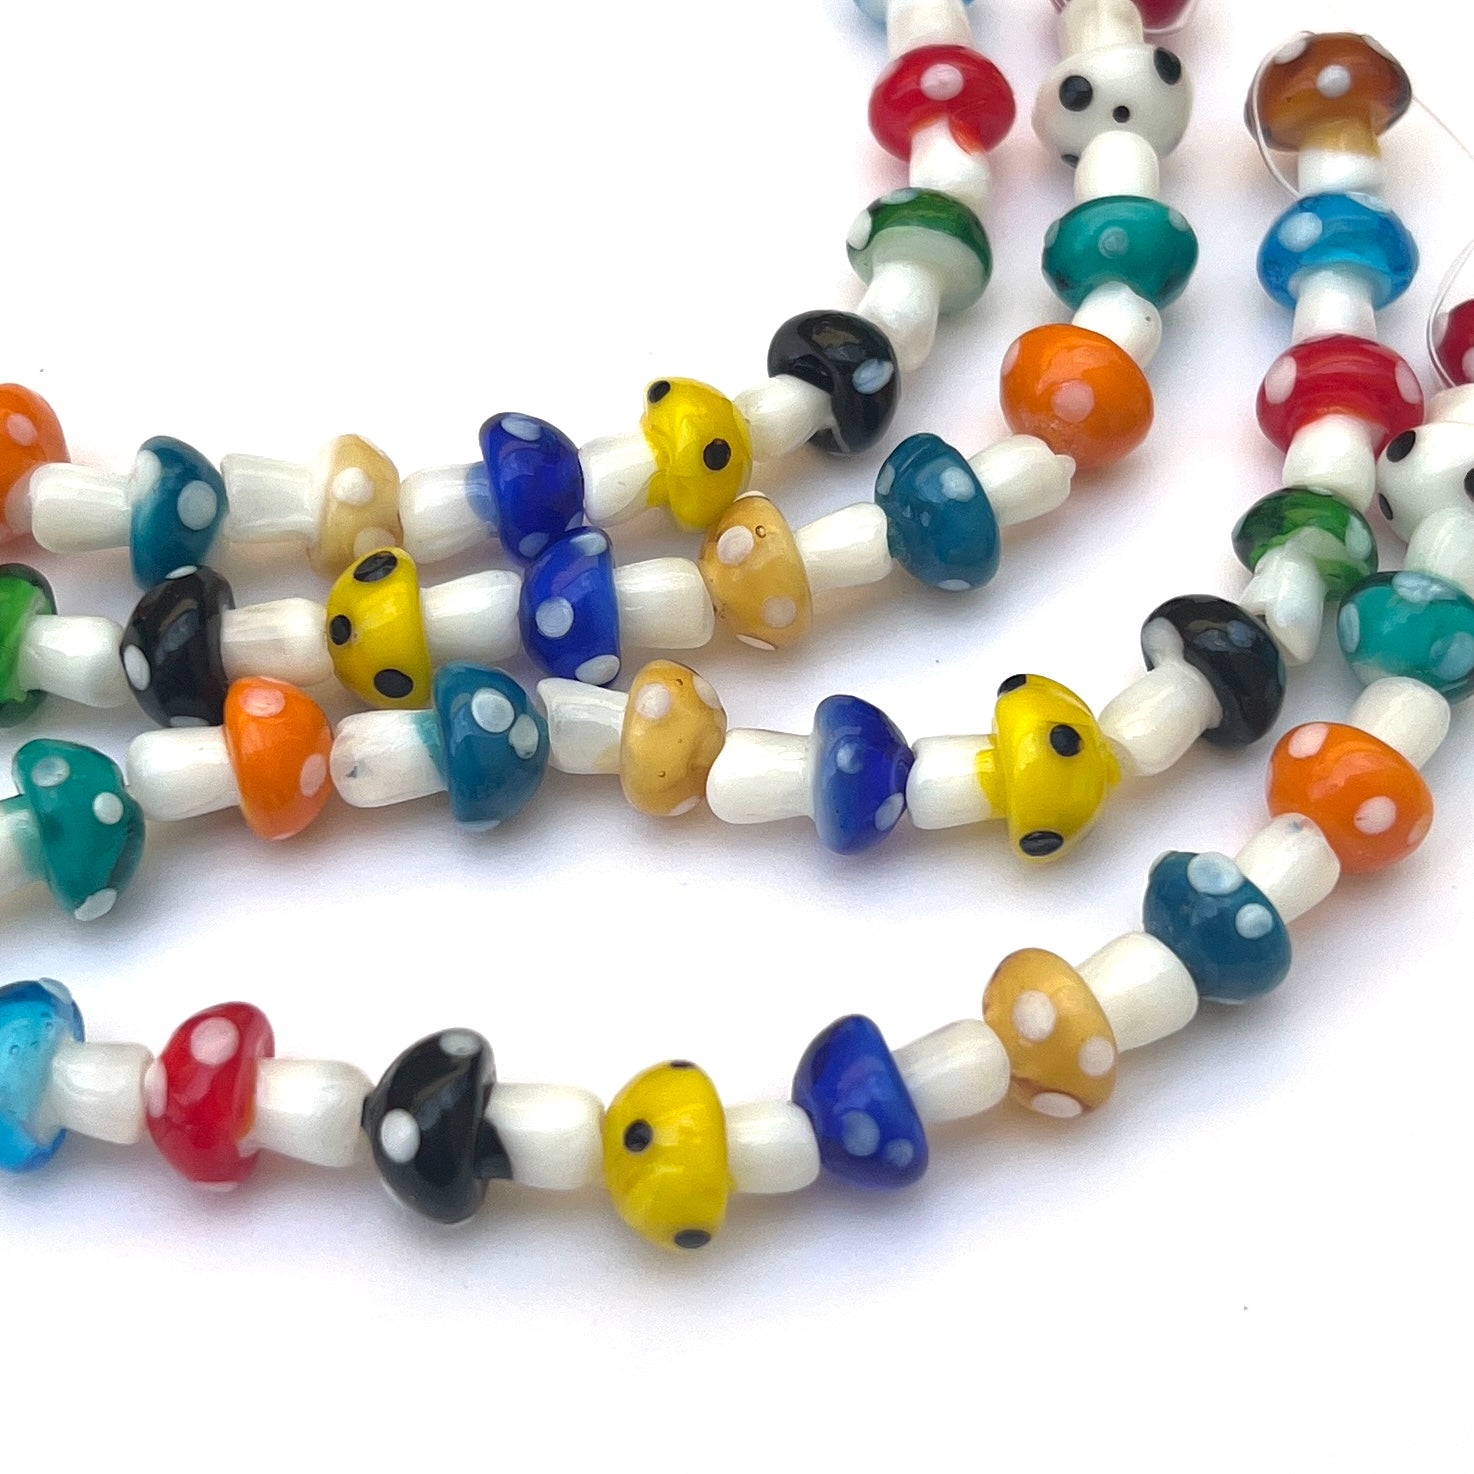 Beebeecraft Pandahall Elite 200pcs Mushroom Lampwork Beads Assorted-Color  Mushroom Millefiori Beads Glass Spacer Loose Beads for Jewelry Making and